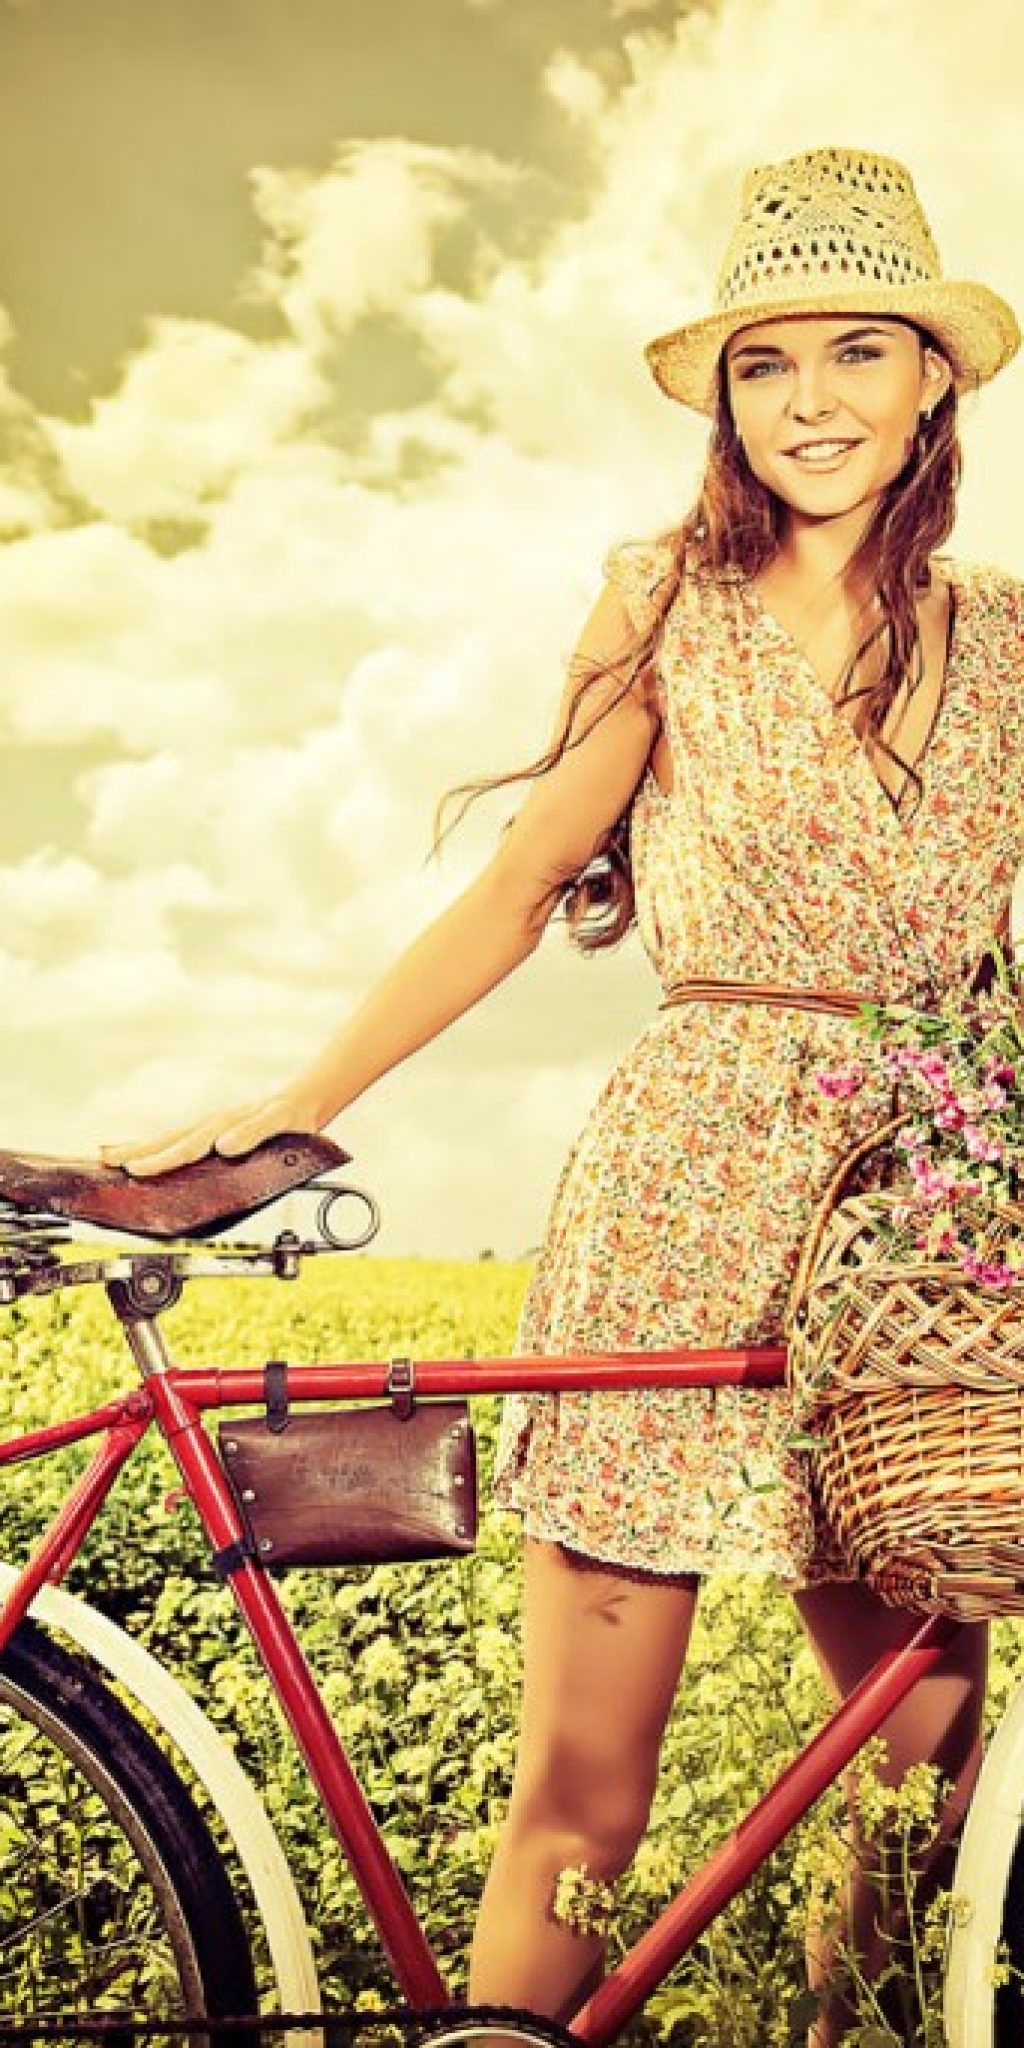 Girl with a bike